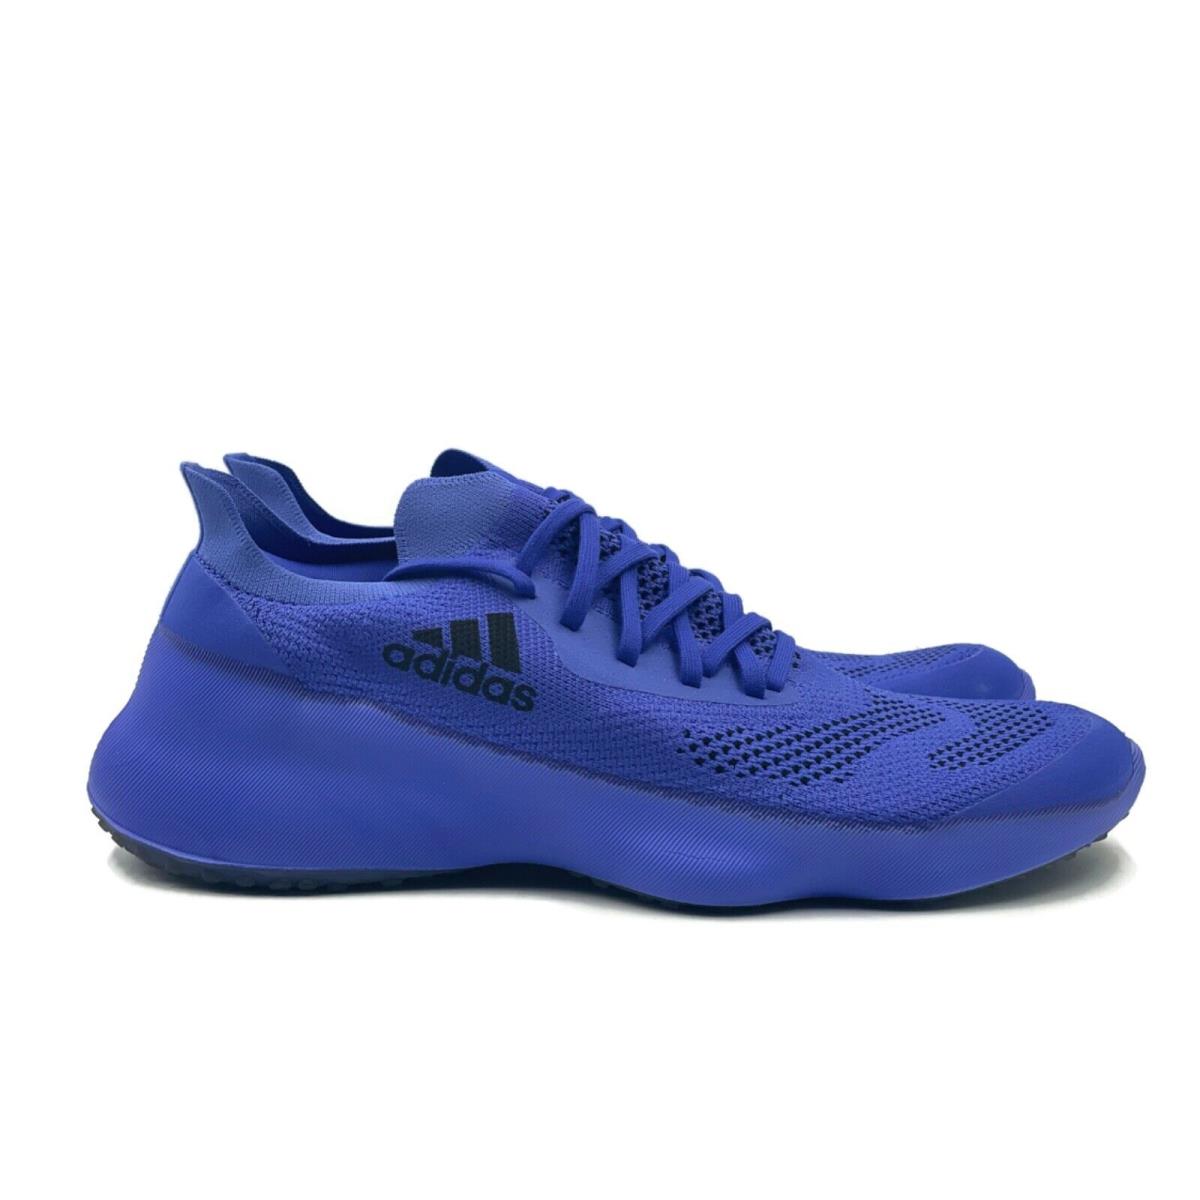 Adidas Futurenatural Mens Casual Running Shoe Blue Athletic Trainer Sneaker